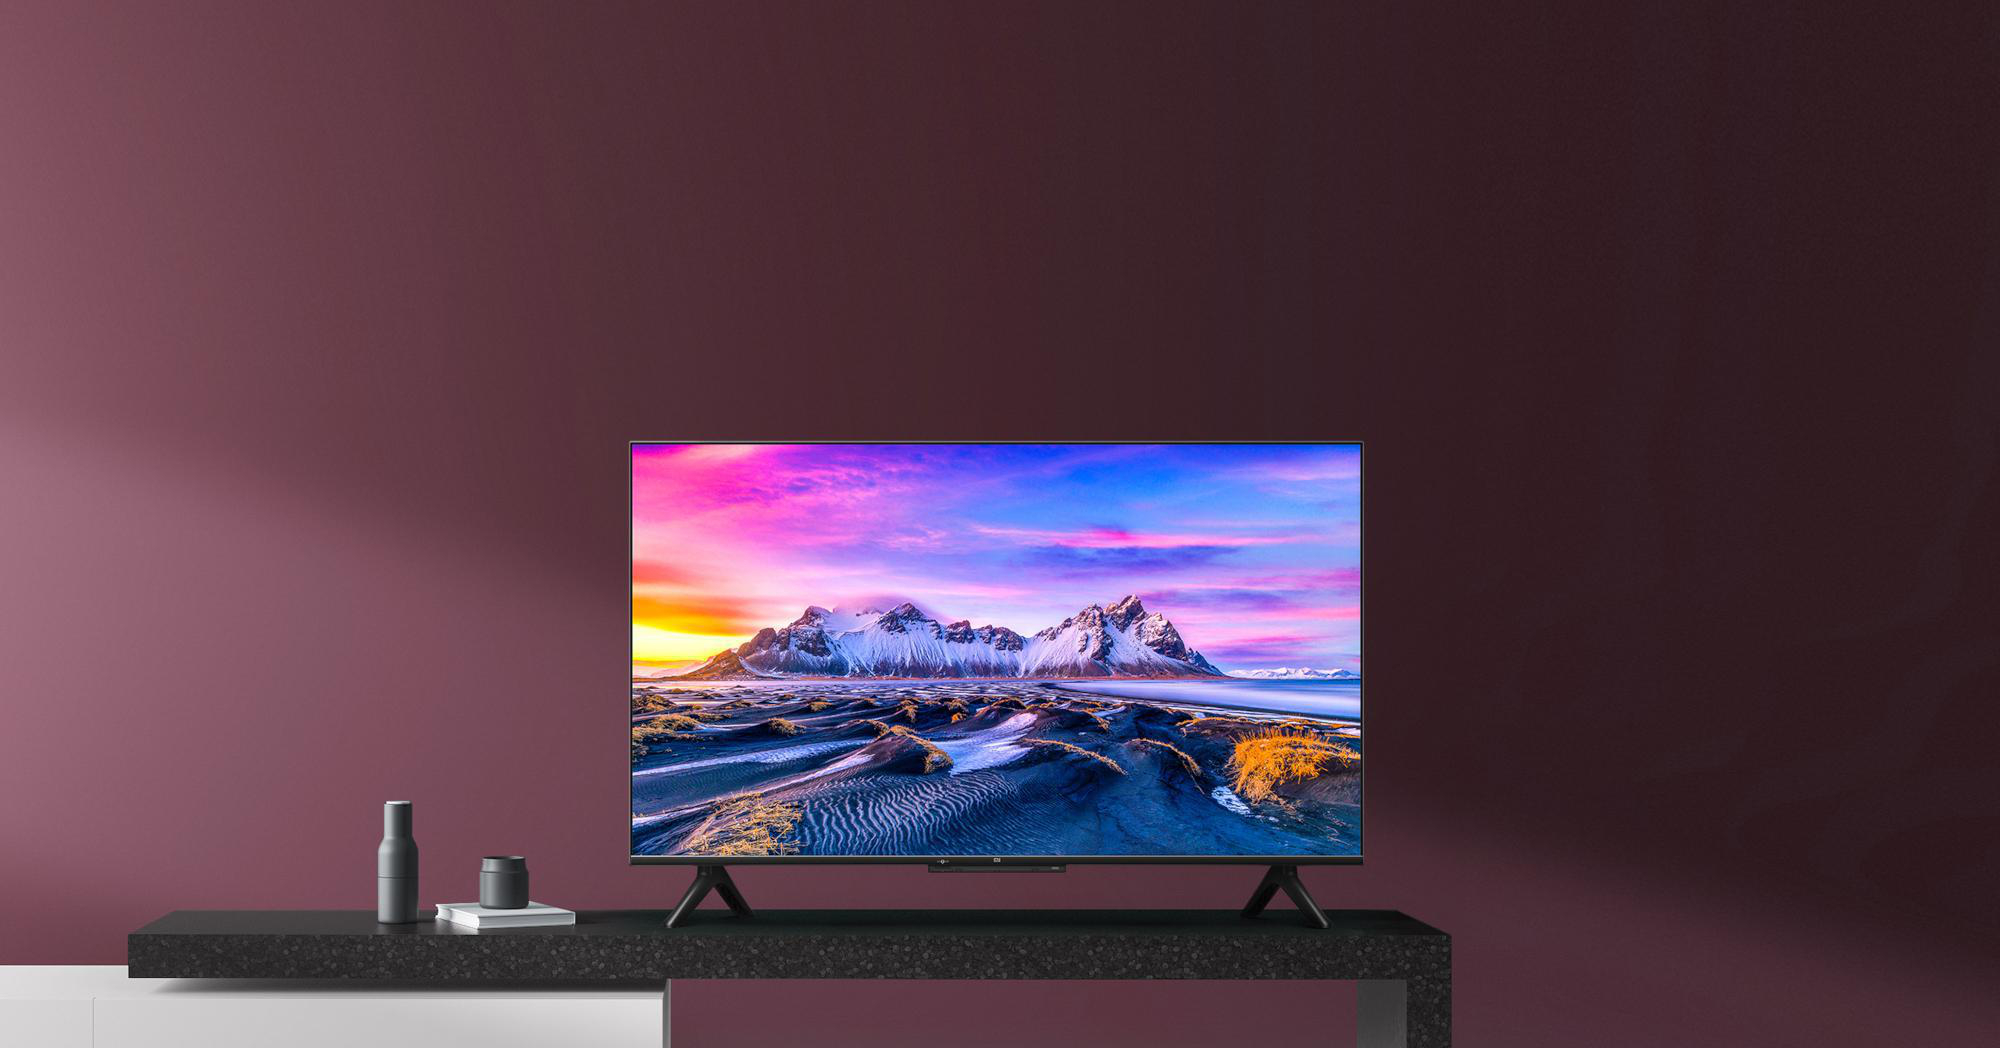 XIAOMI MI LED TV Android P1 43 108 4K, 43 SMART (Flat, / cm, LCD 10) Zoll TV TV, UHD